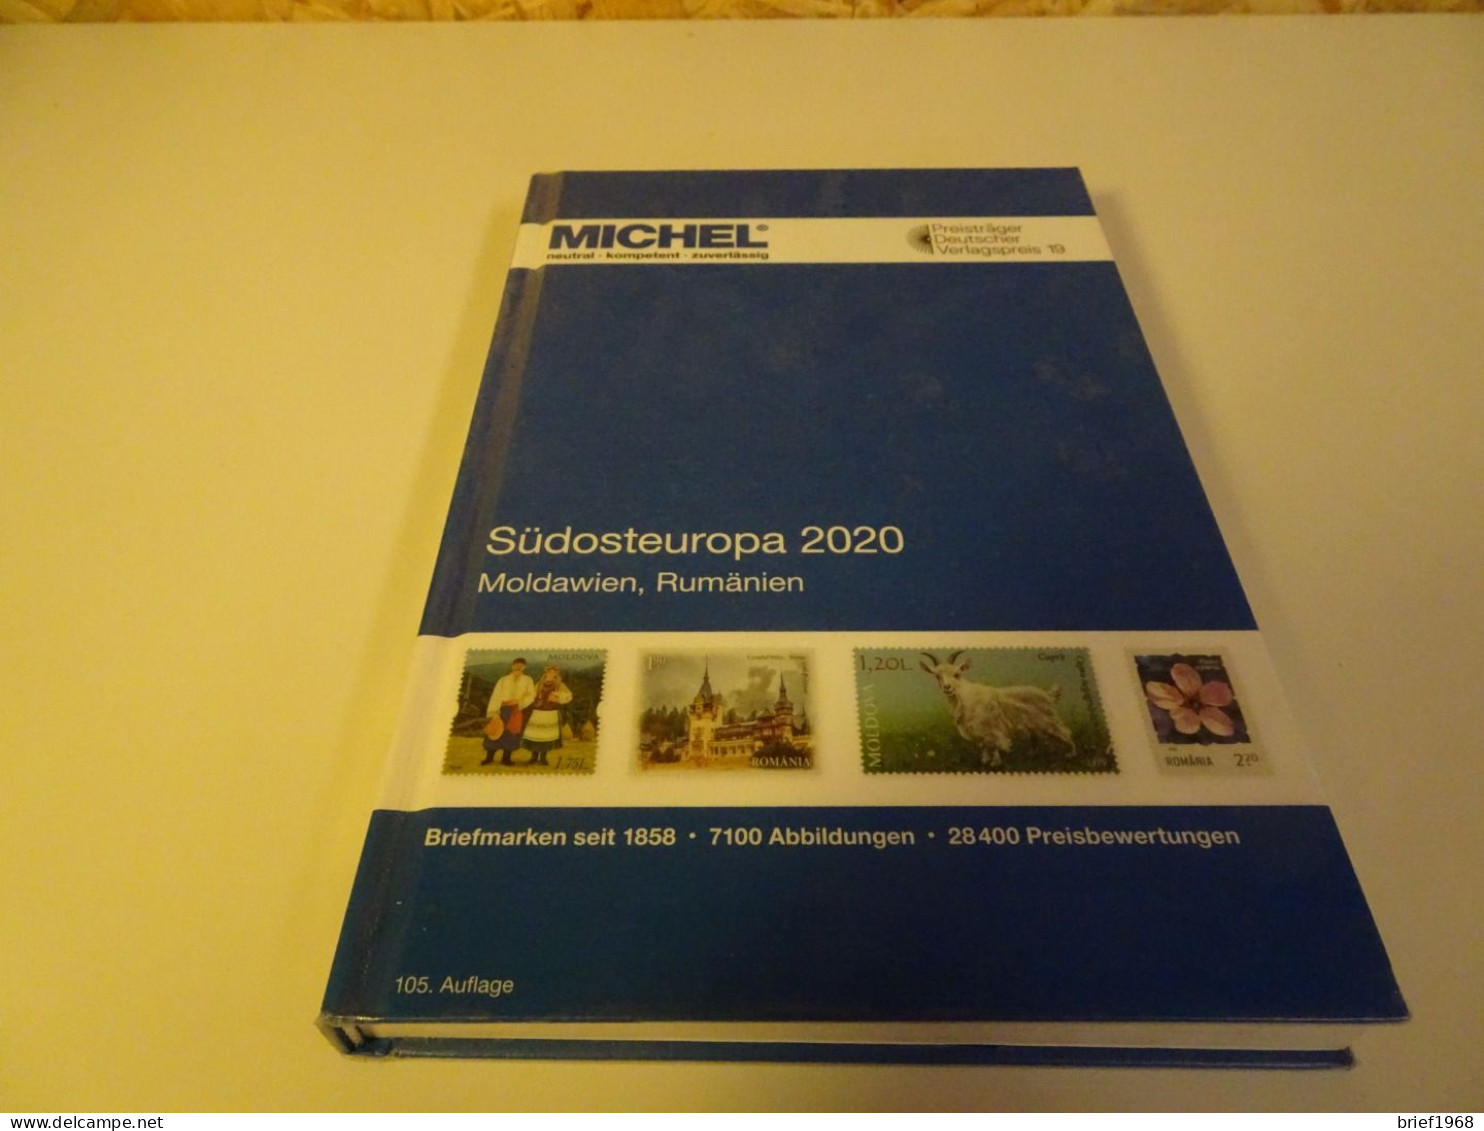 Michel Südosteuropa 2020 (25186) - Germania